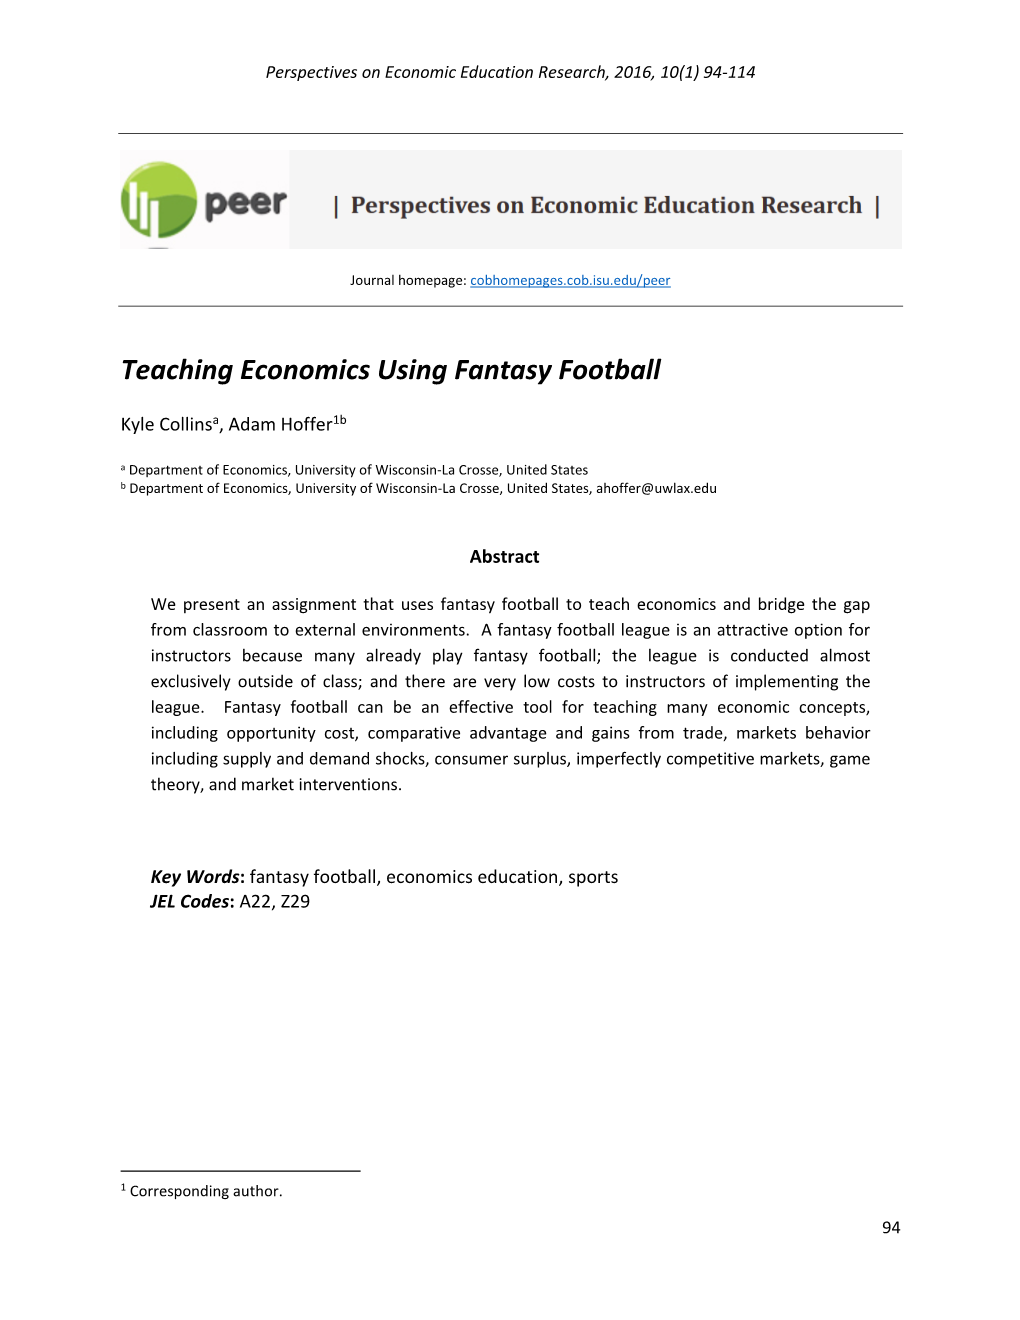 Teaching Economics Using Fantasy Football